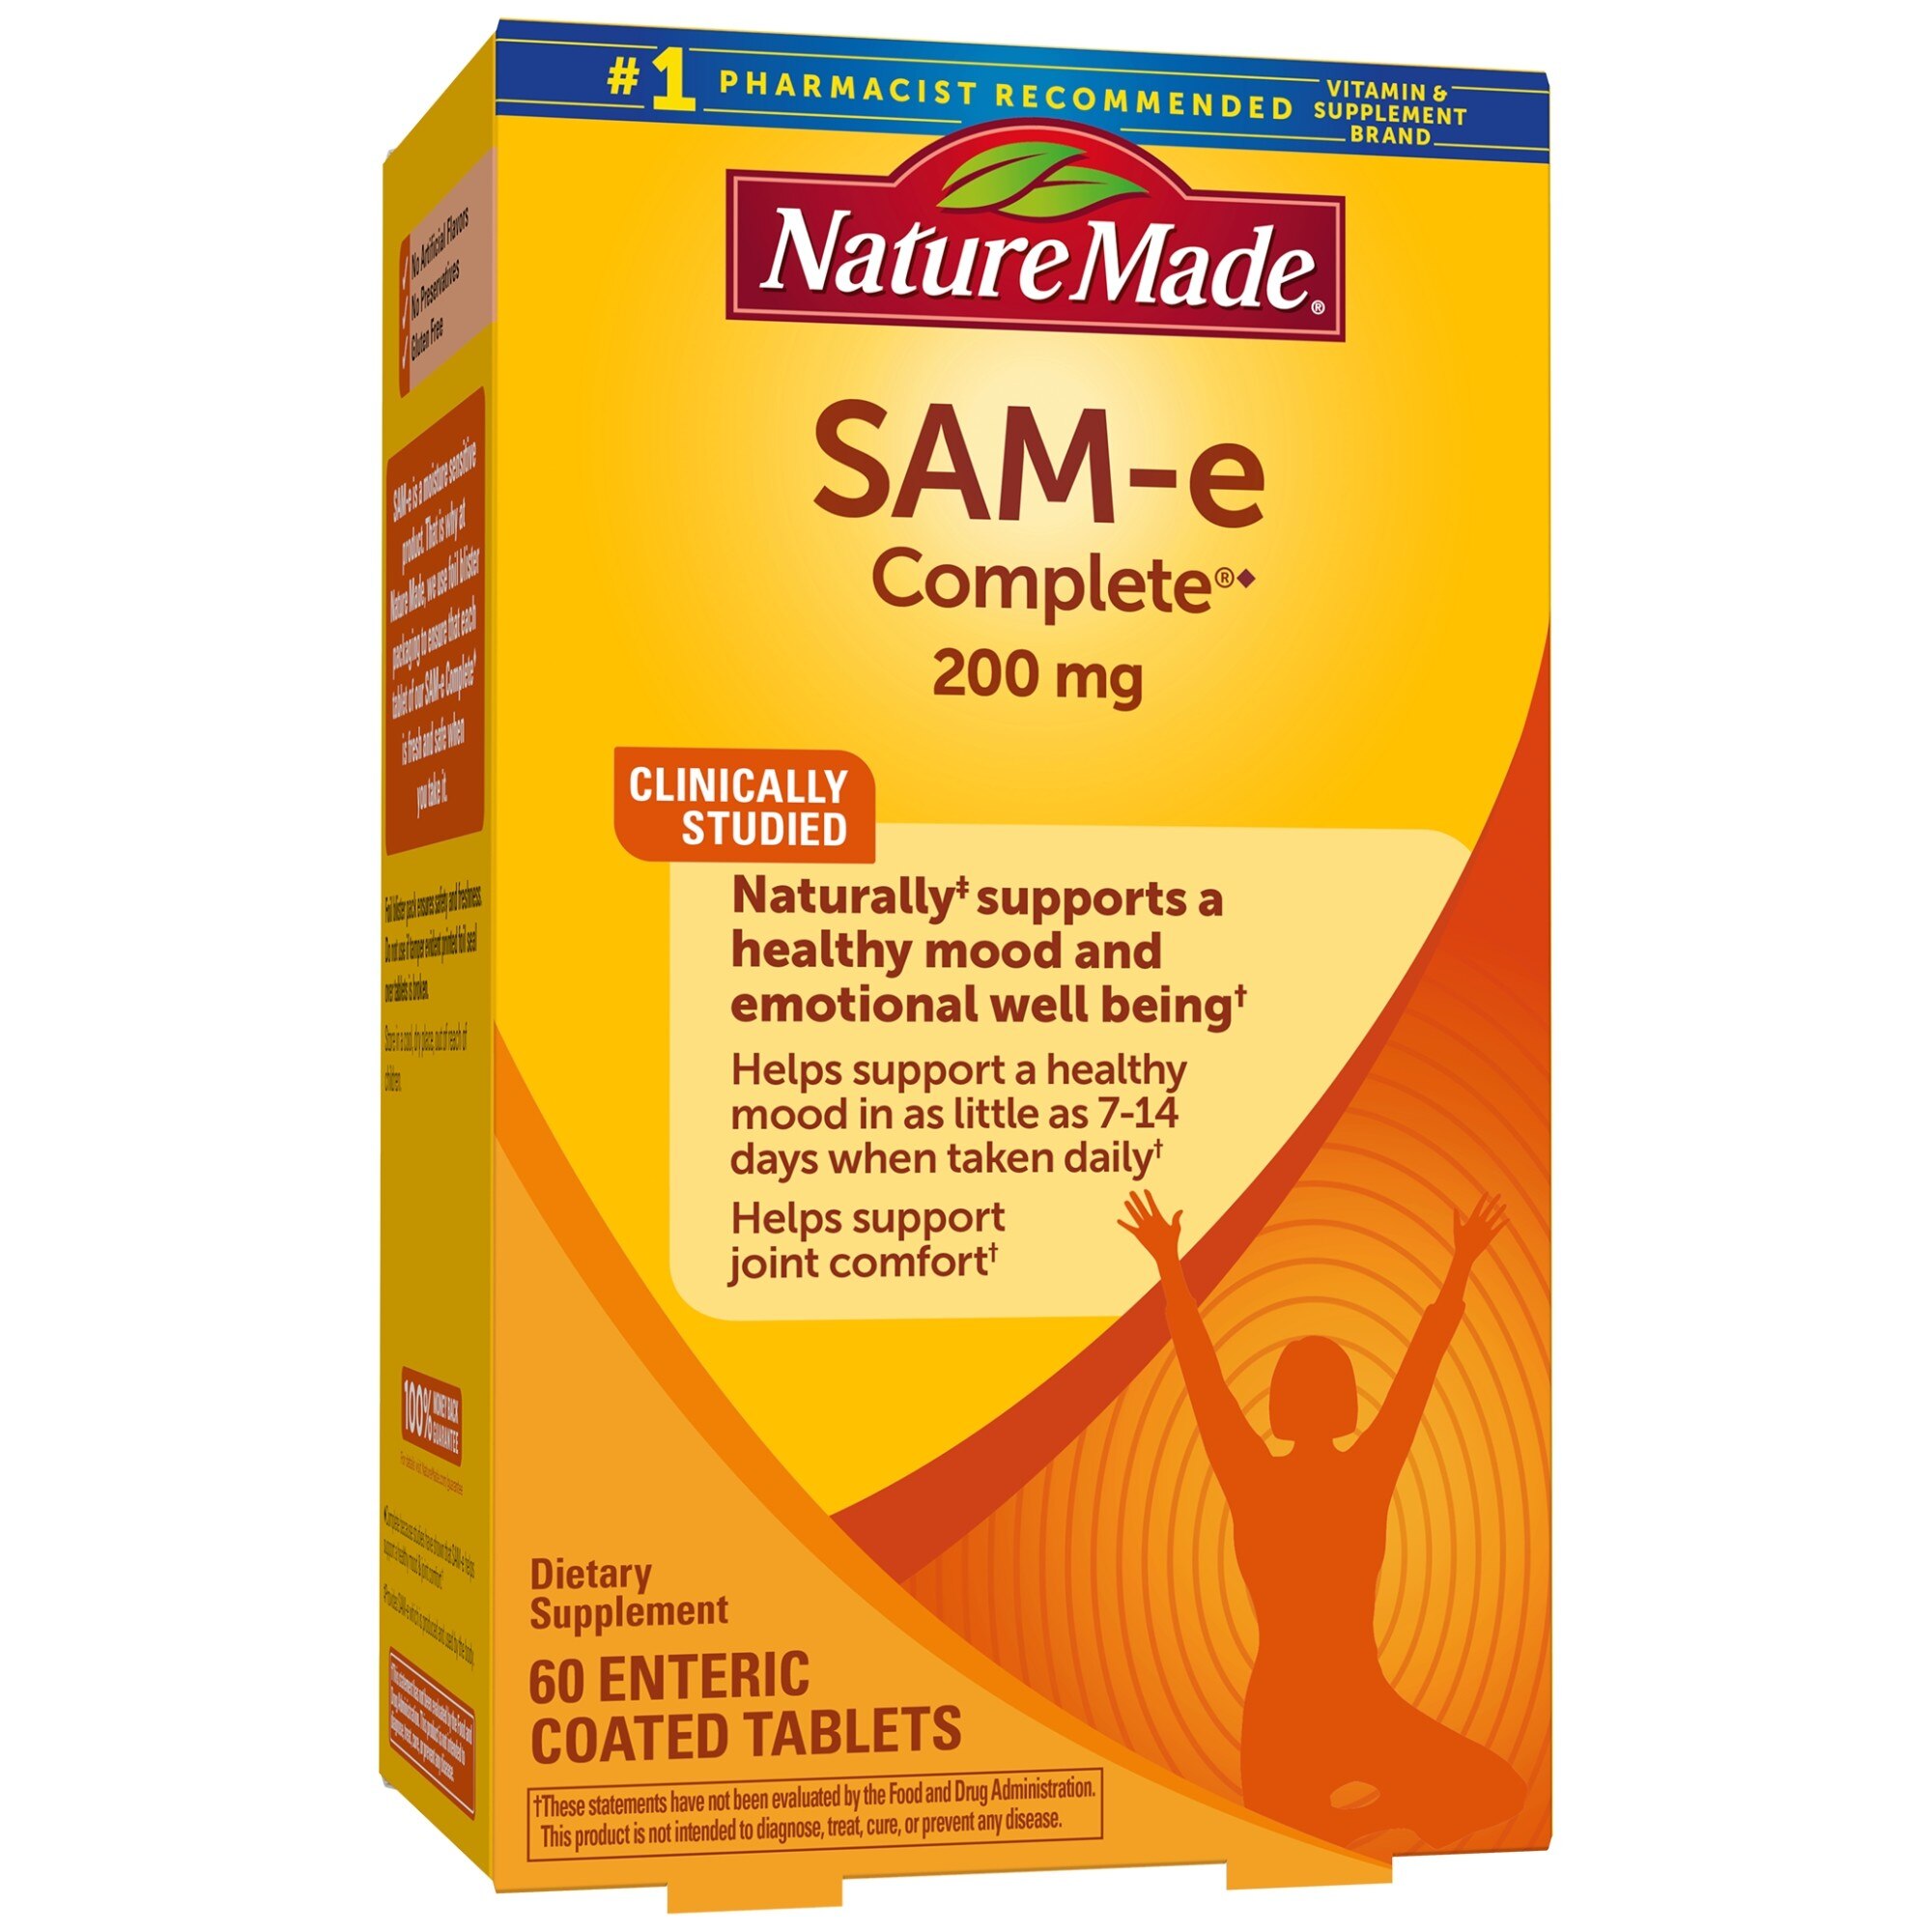 Nature Made SAM-e Complete** - Tabletas, 200 mg. Tabletas, tamaño económico